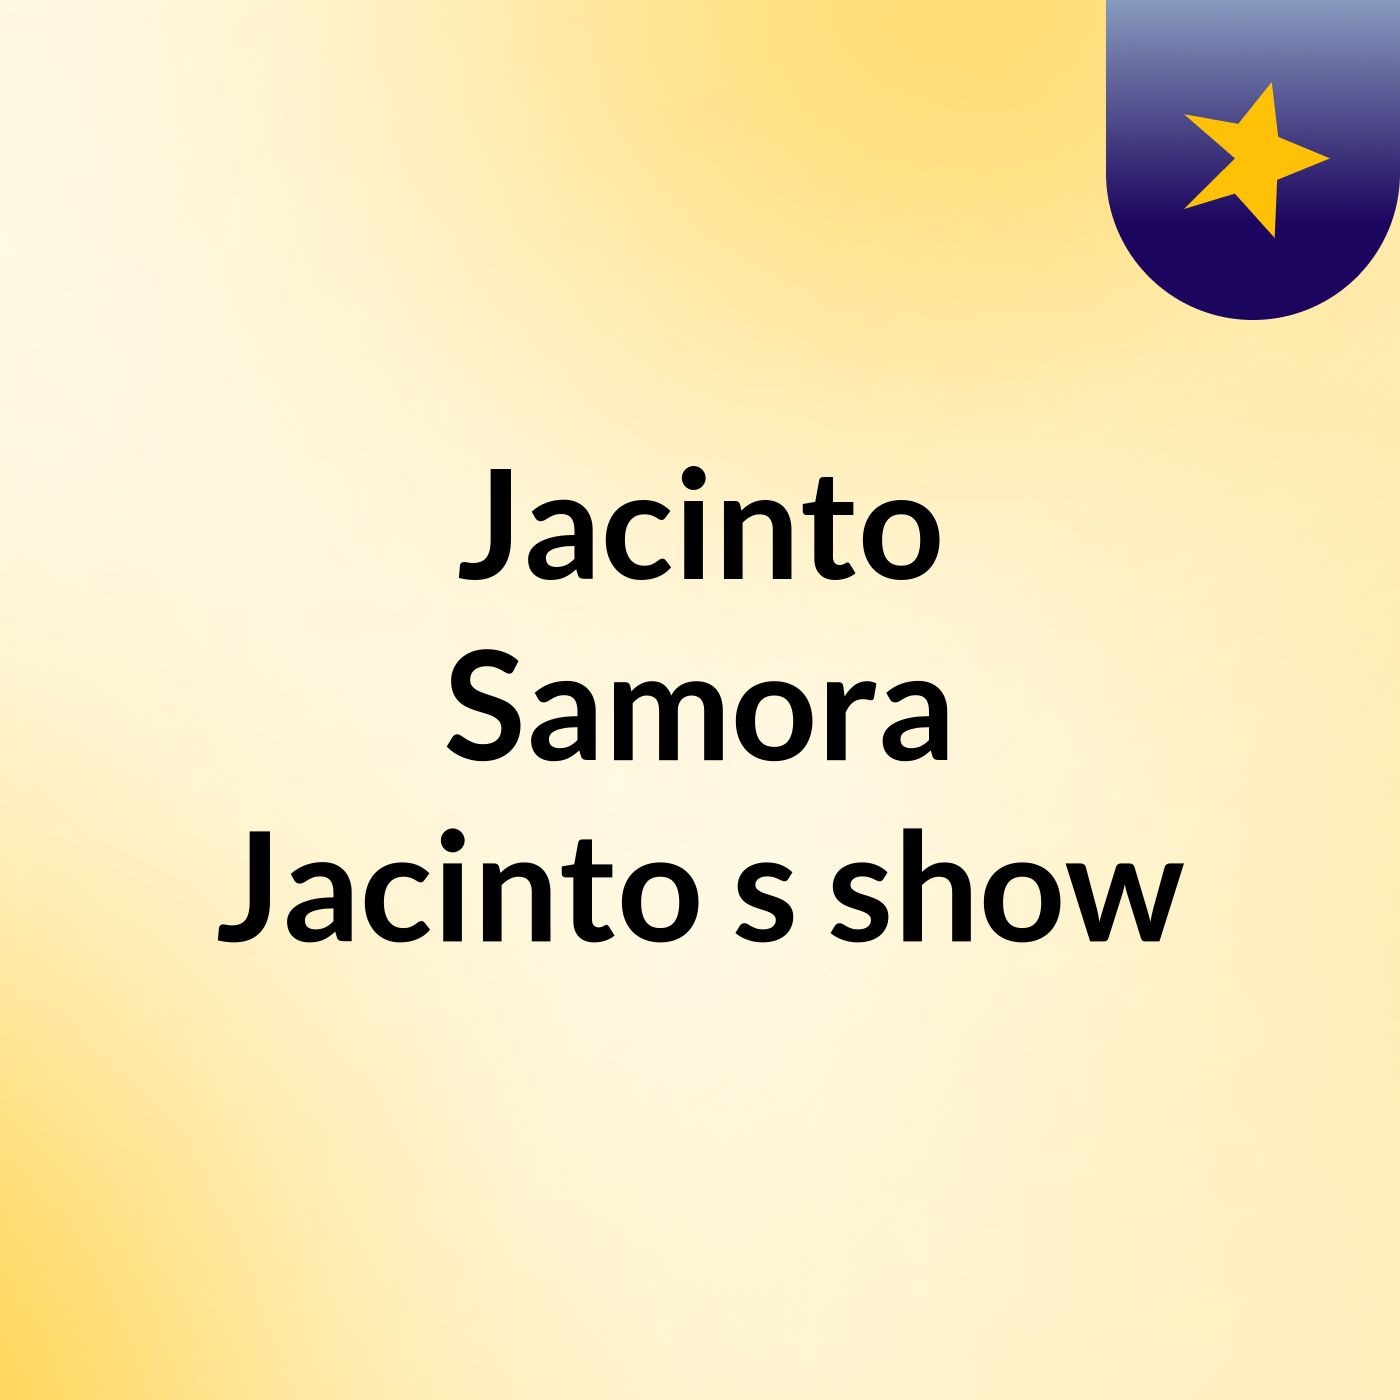 Jacinto Samora Jacinto's show